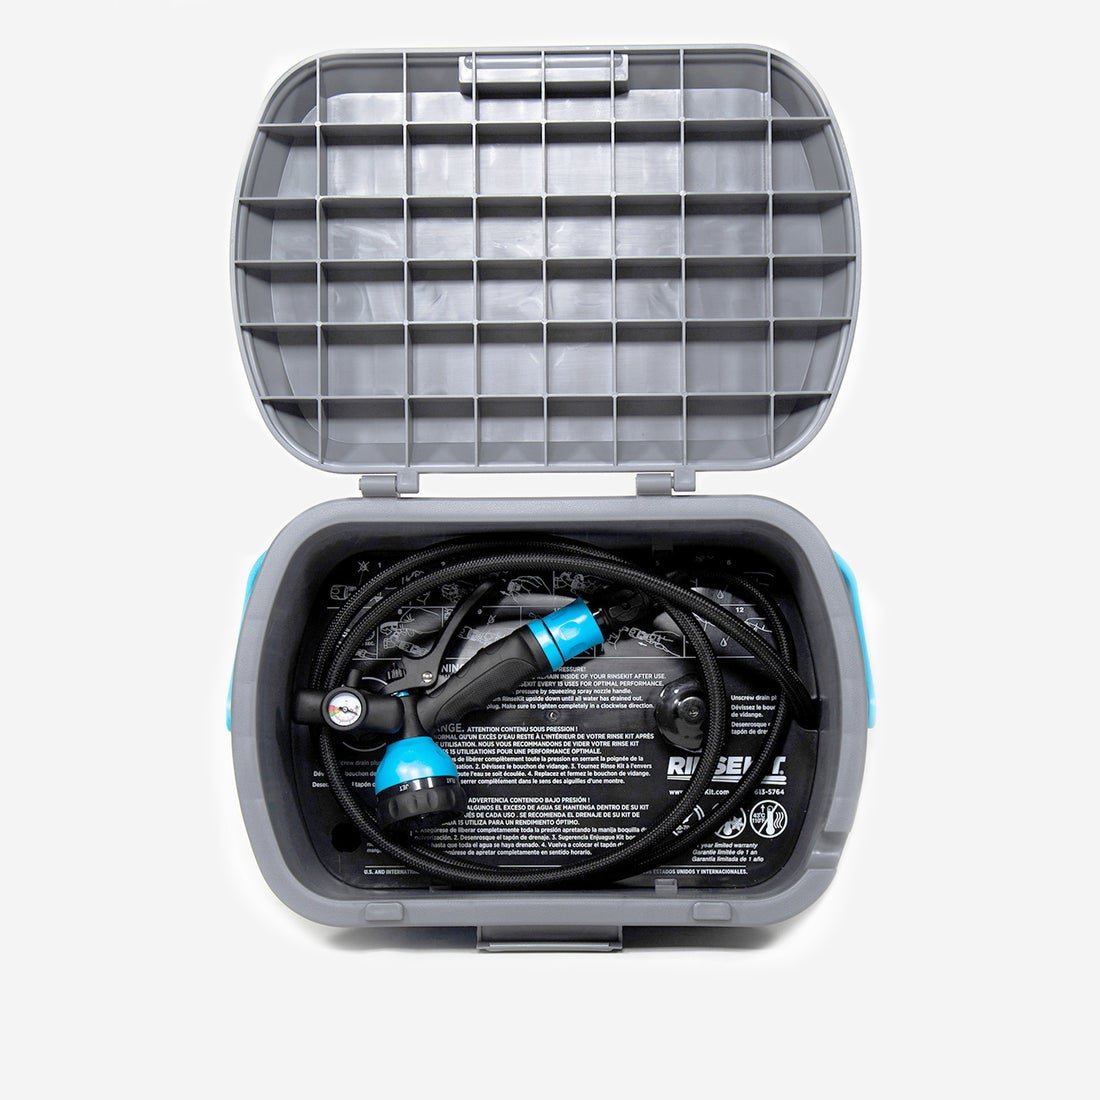  RinseKit Plus, Ducha portátil con bomba de mano, 1.8 galones  de agua caliente o fría